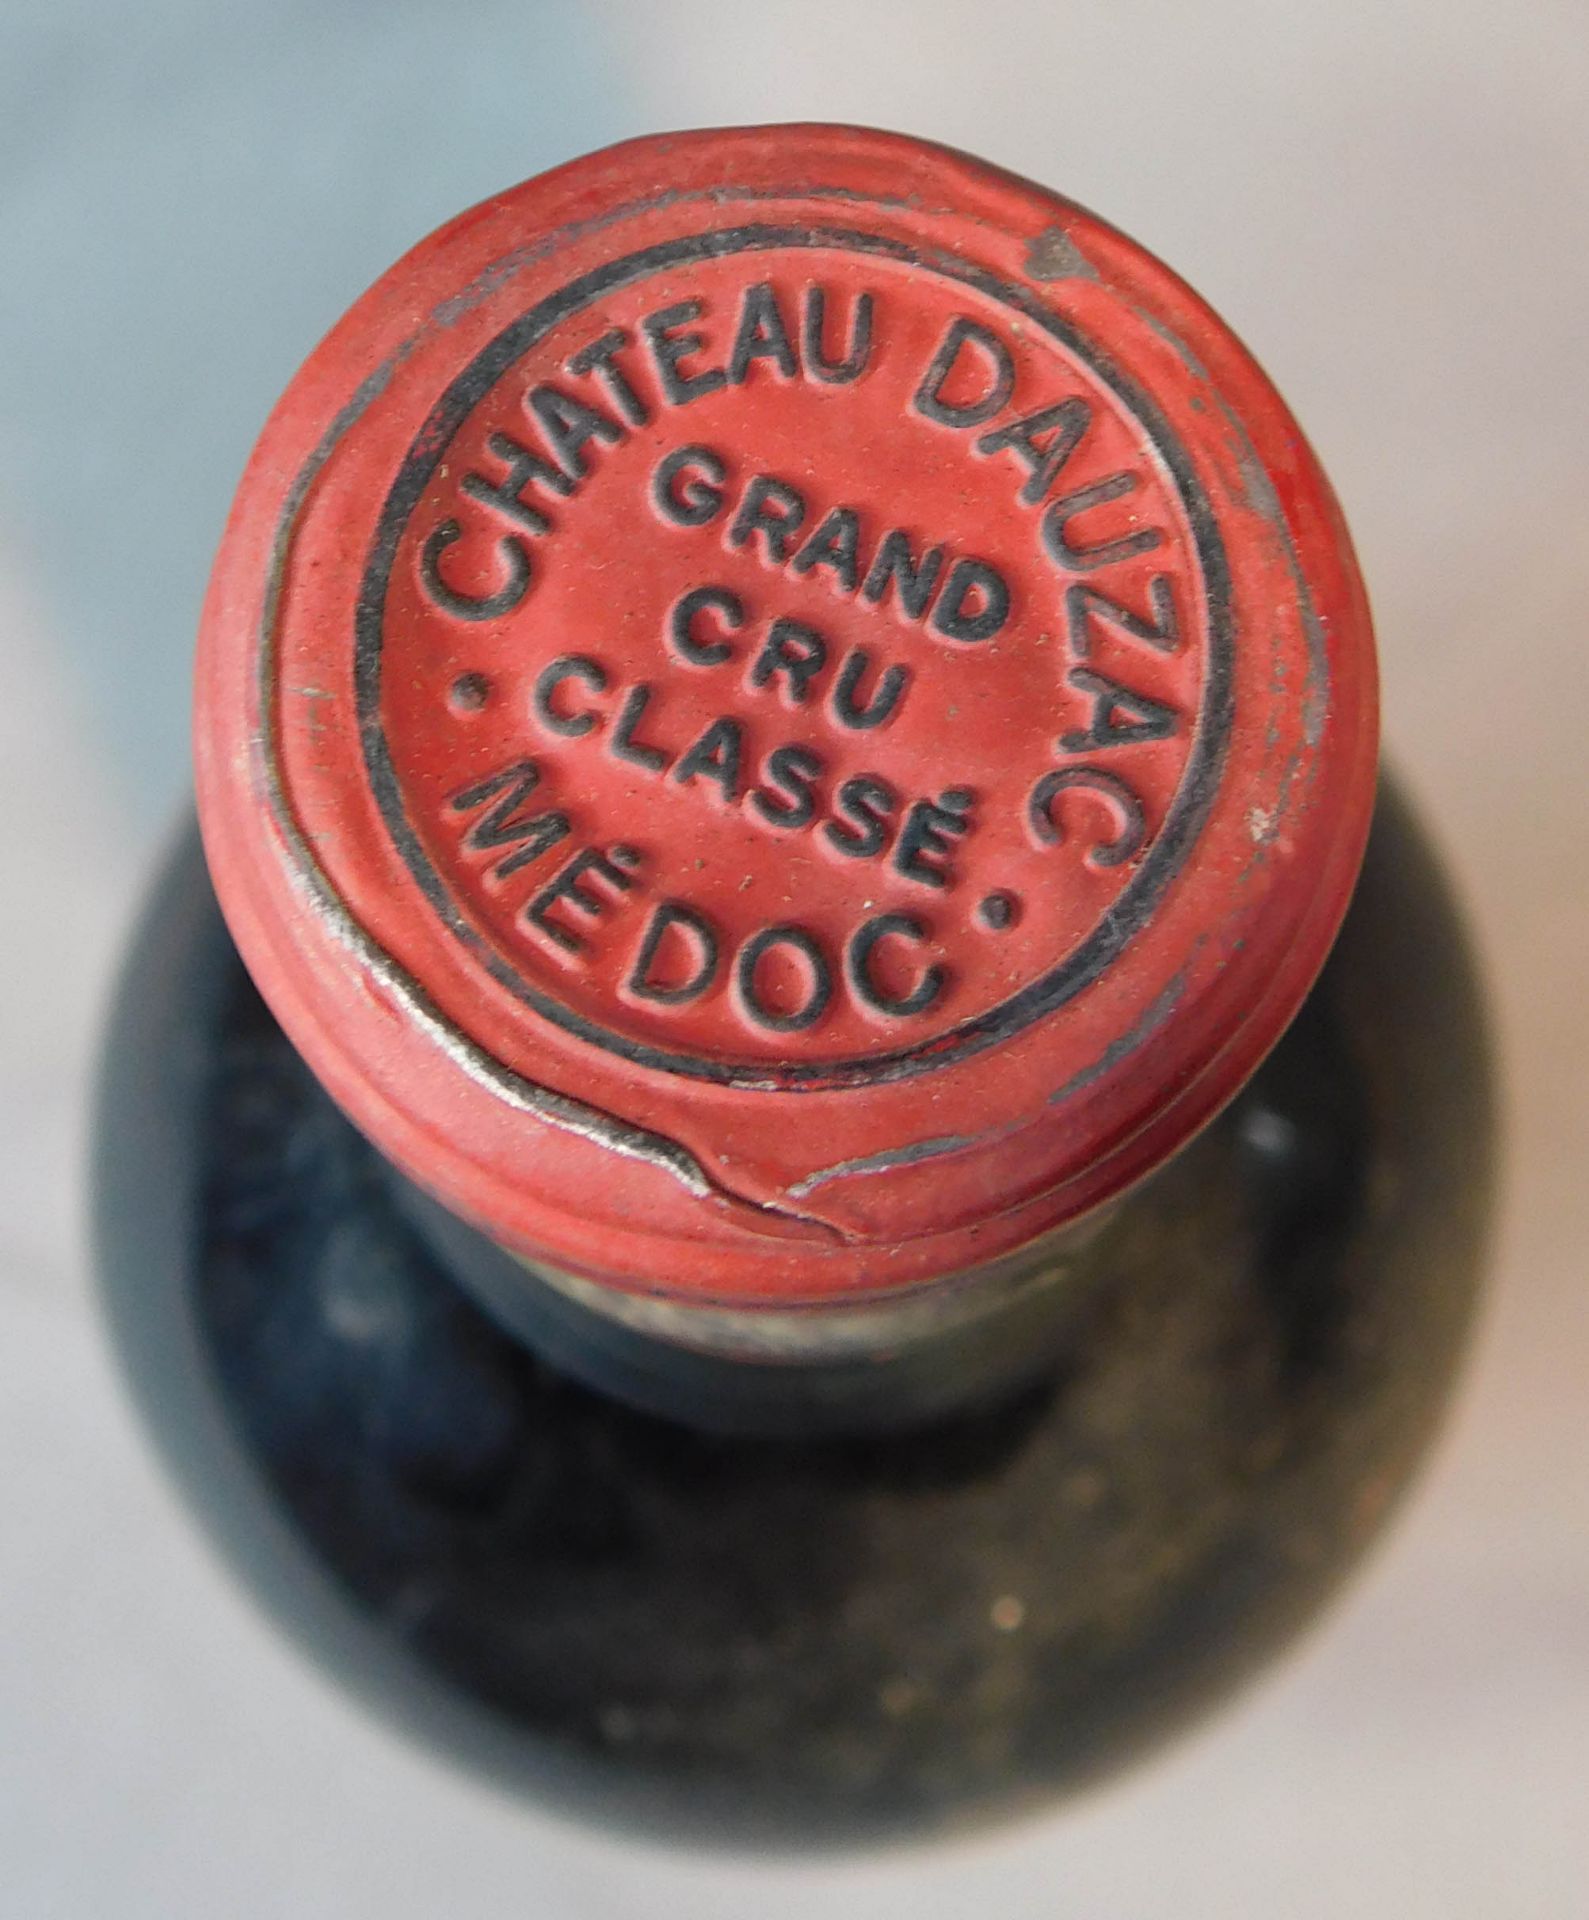 3 Flaschen Bordeaux Grand Cru Classé. Rotwein Frankreich. - Image 17 of 18